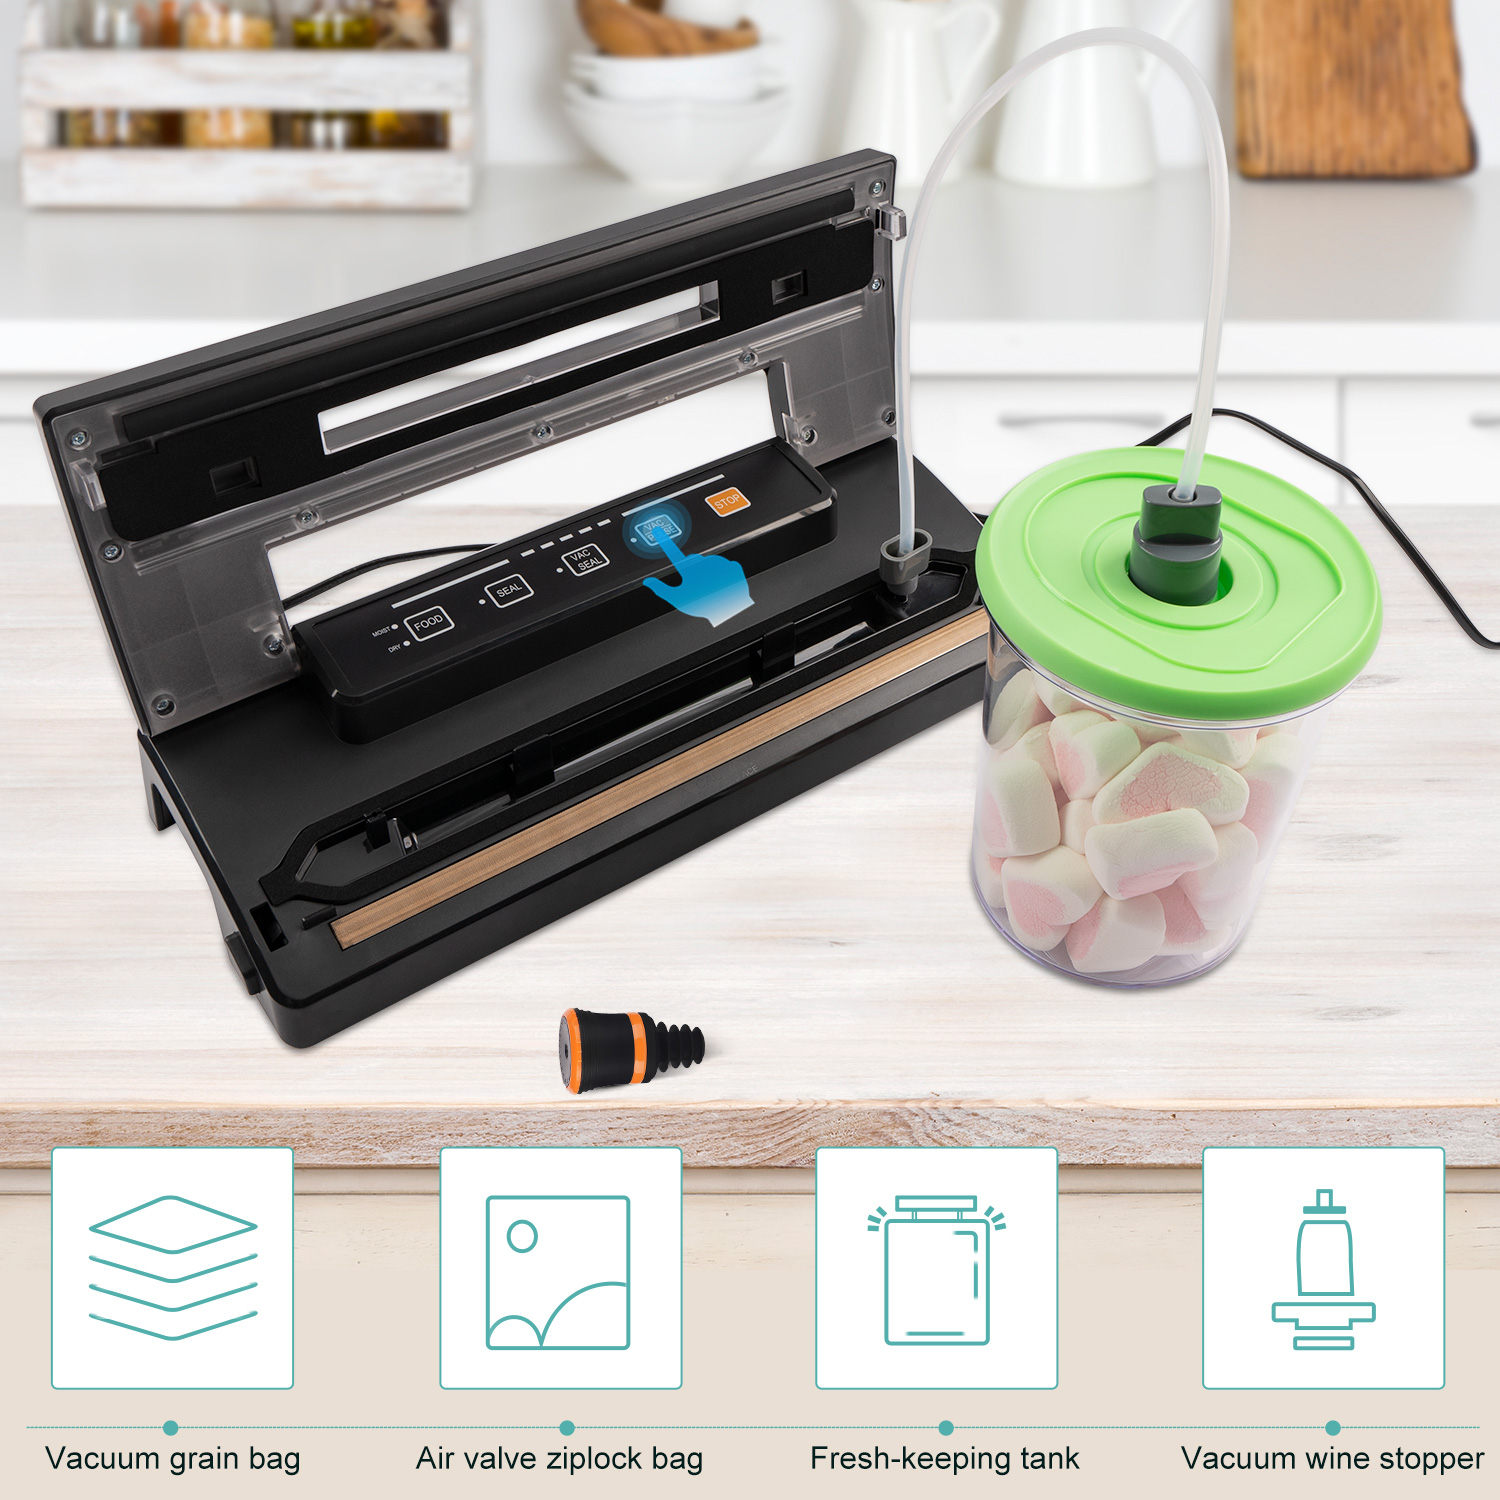 Home kitchen food vacuum sealer,VS2202